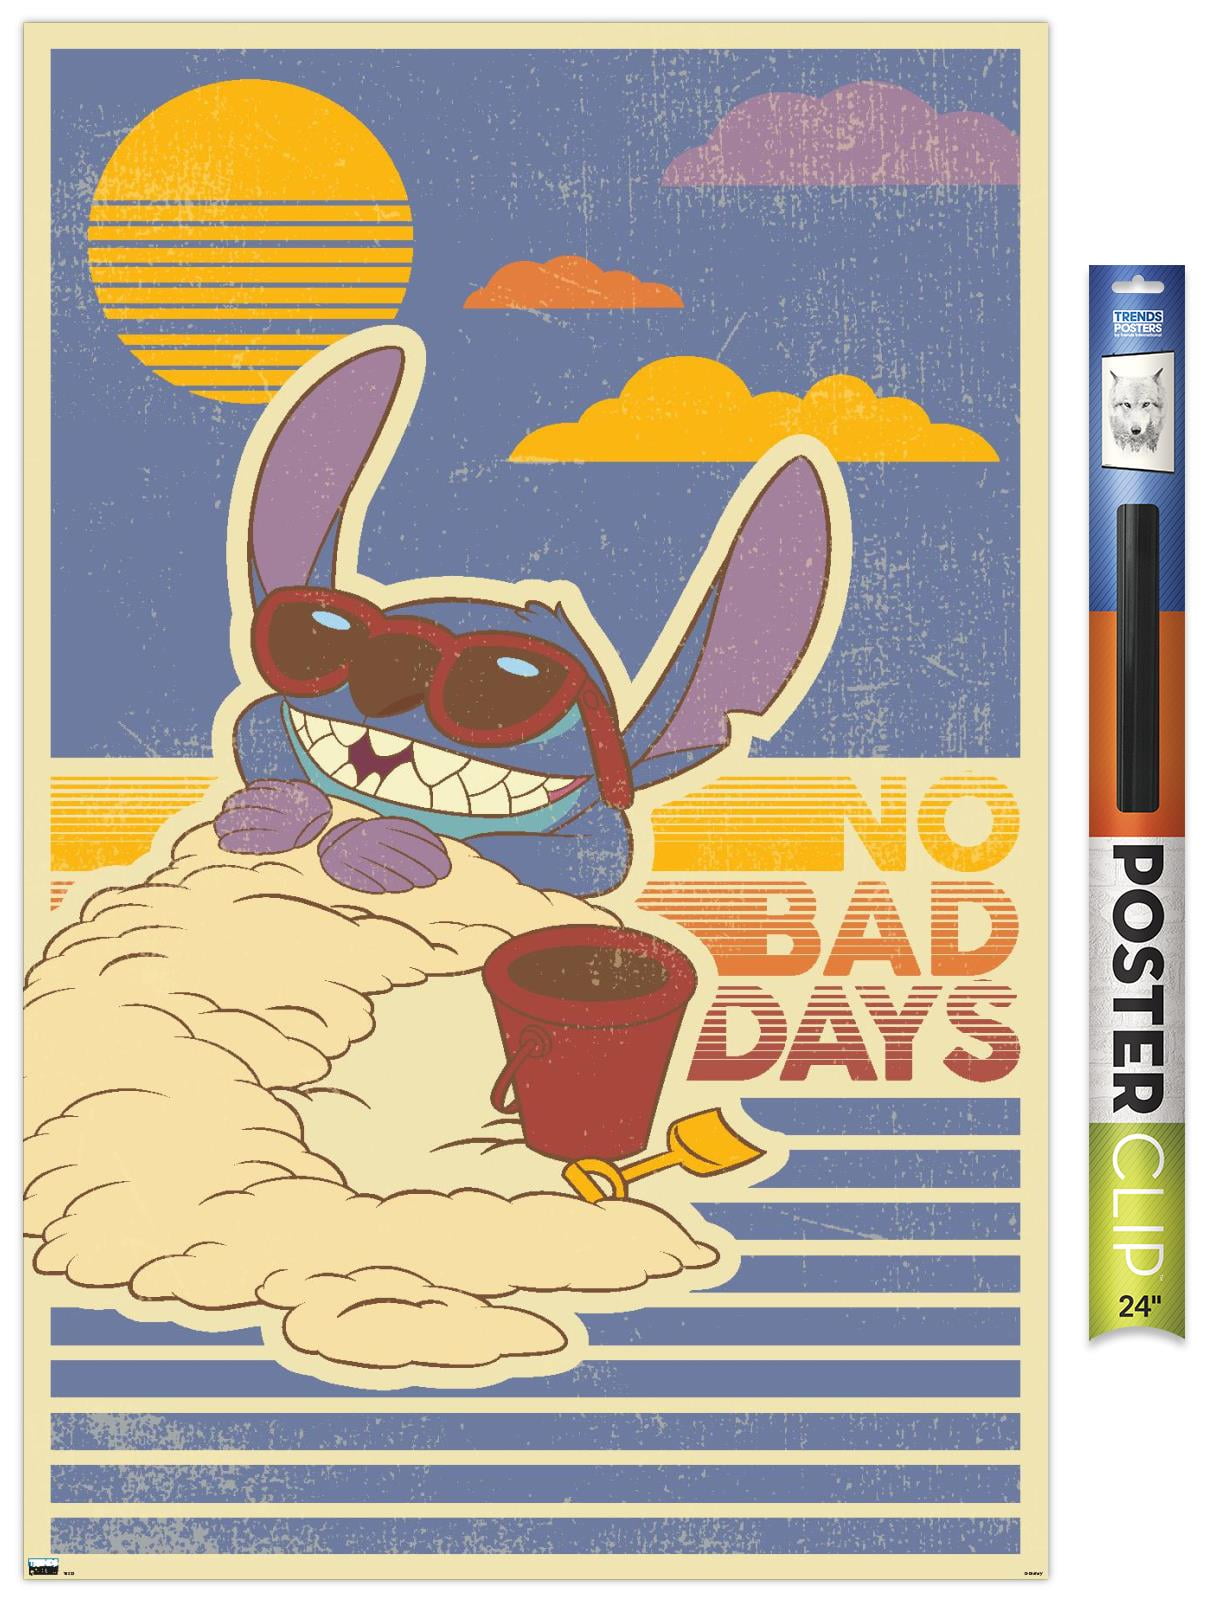 Disney Lilo and Stitch - No Bad Days Wall Poster, 14.725 x 22.375 